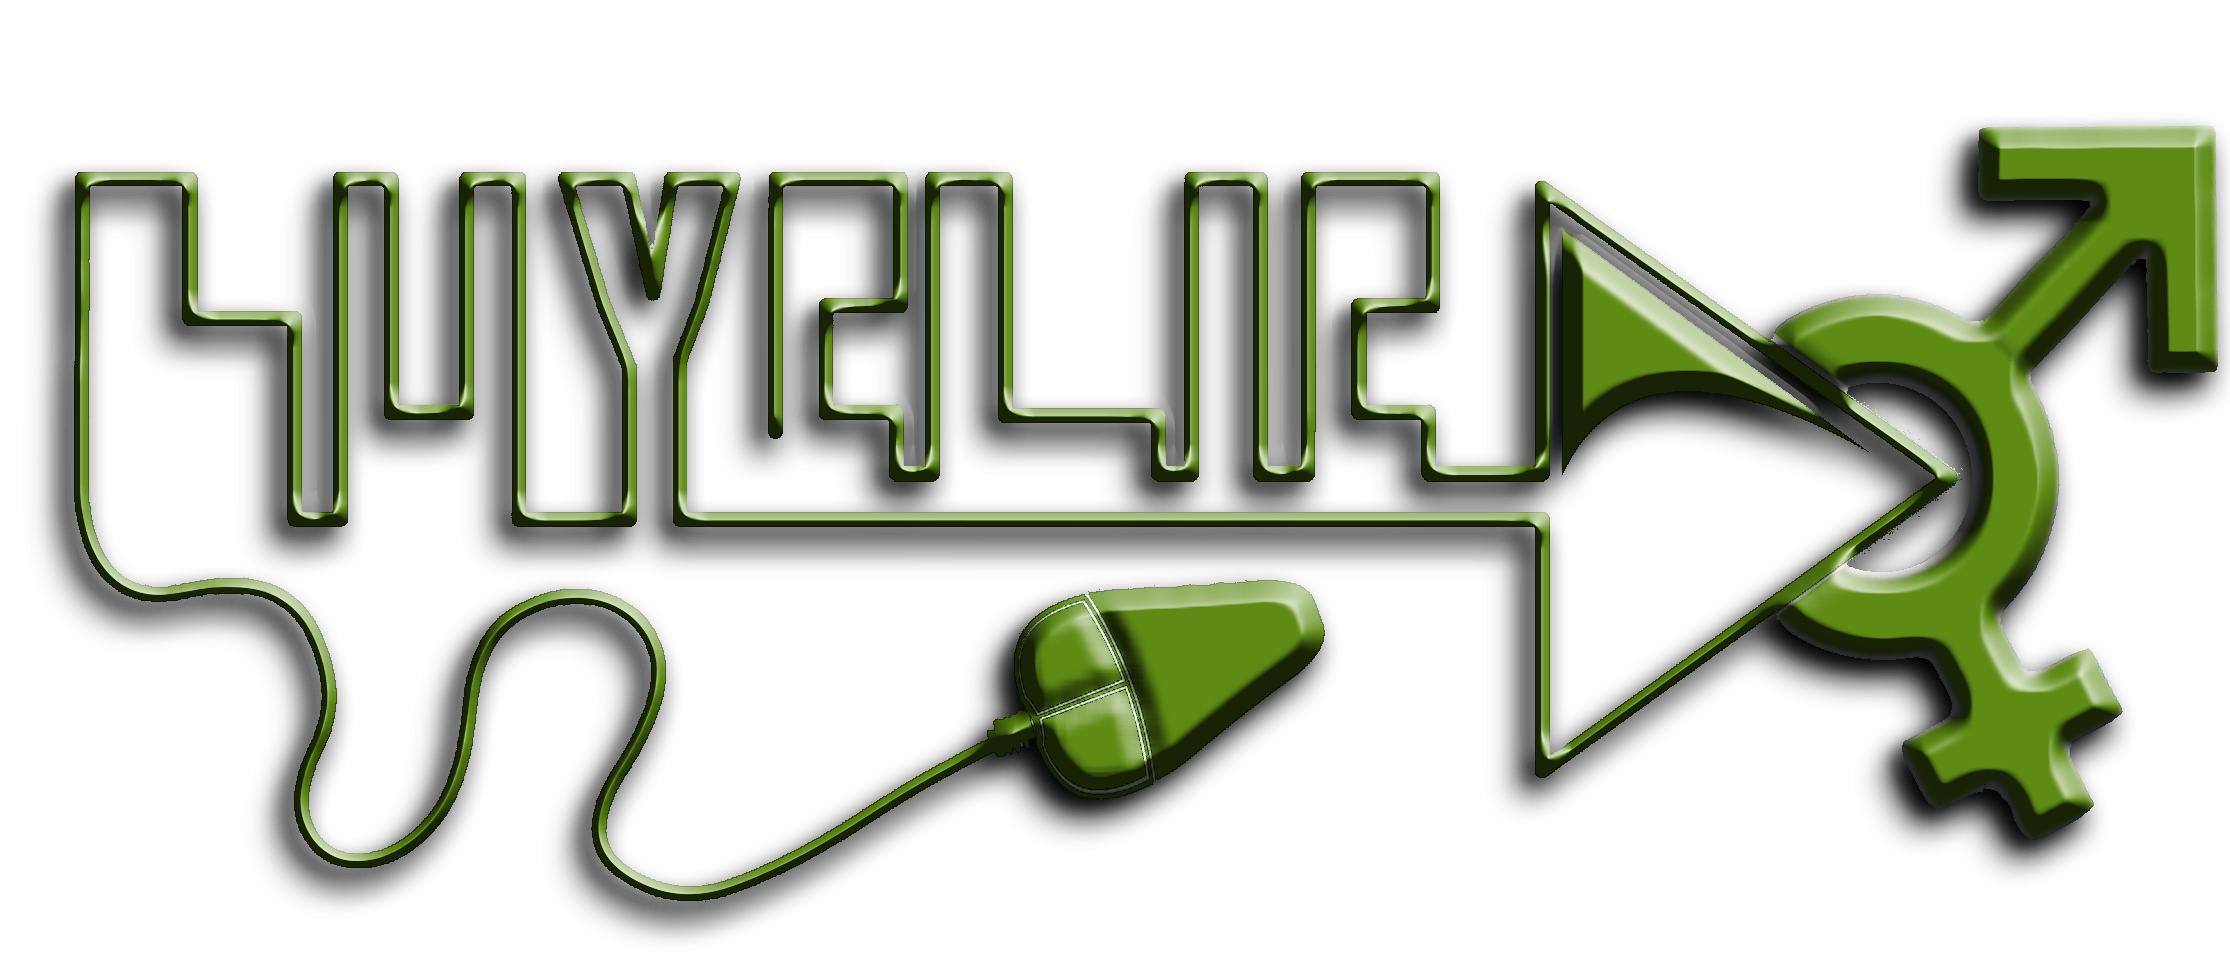 Buyclic logo